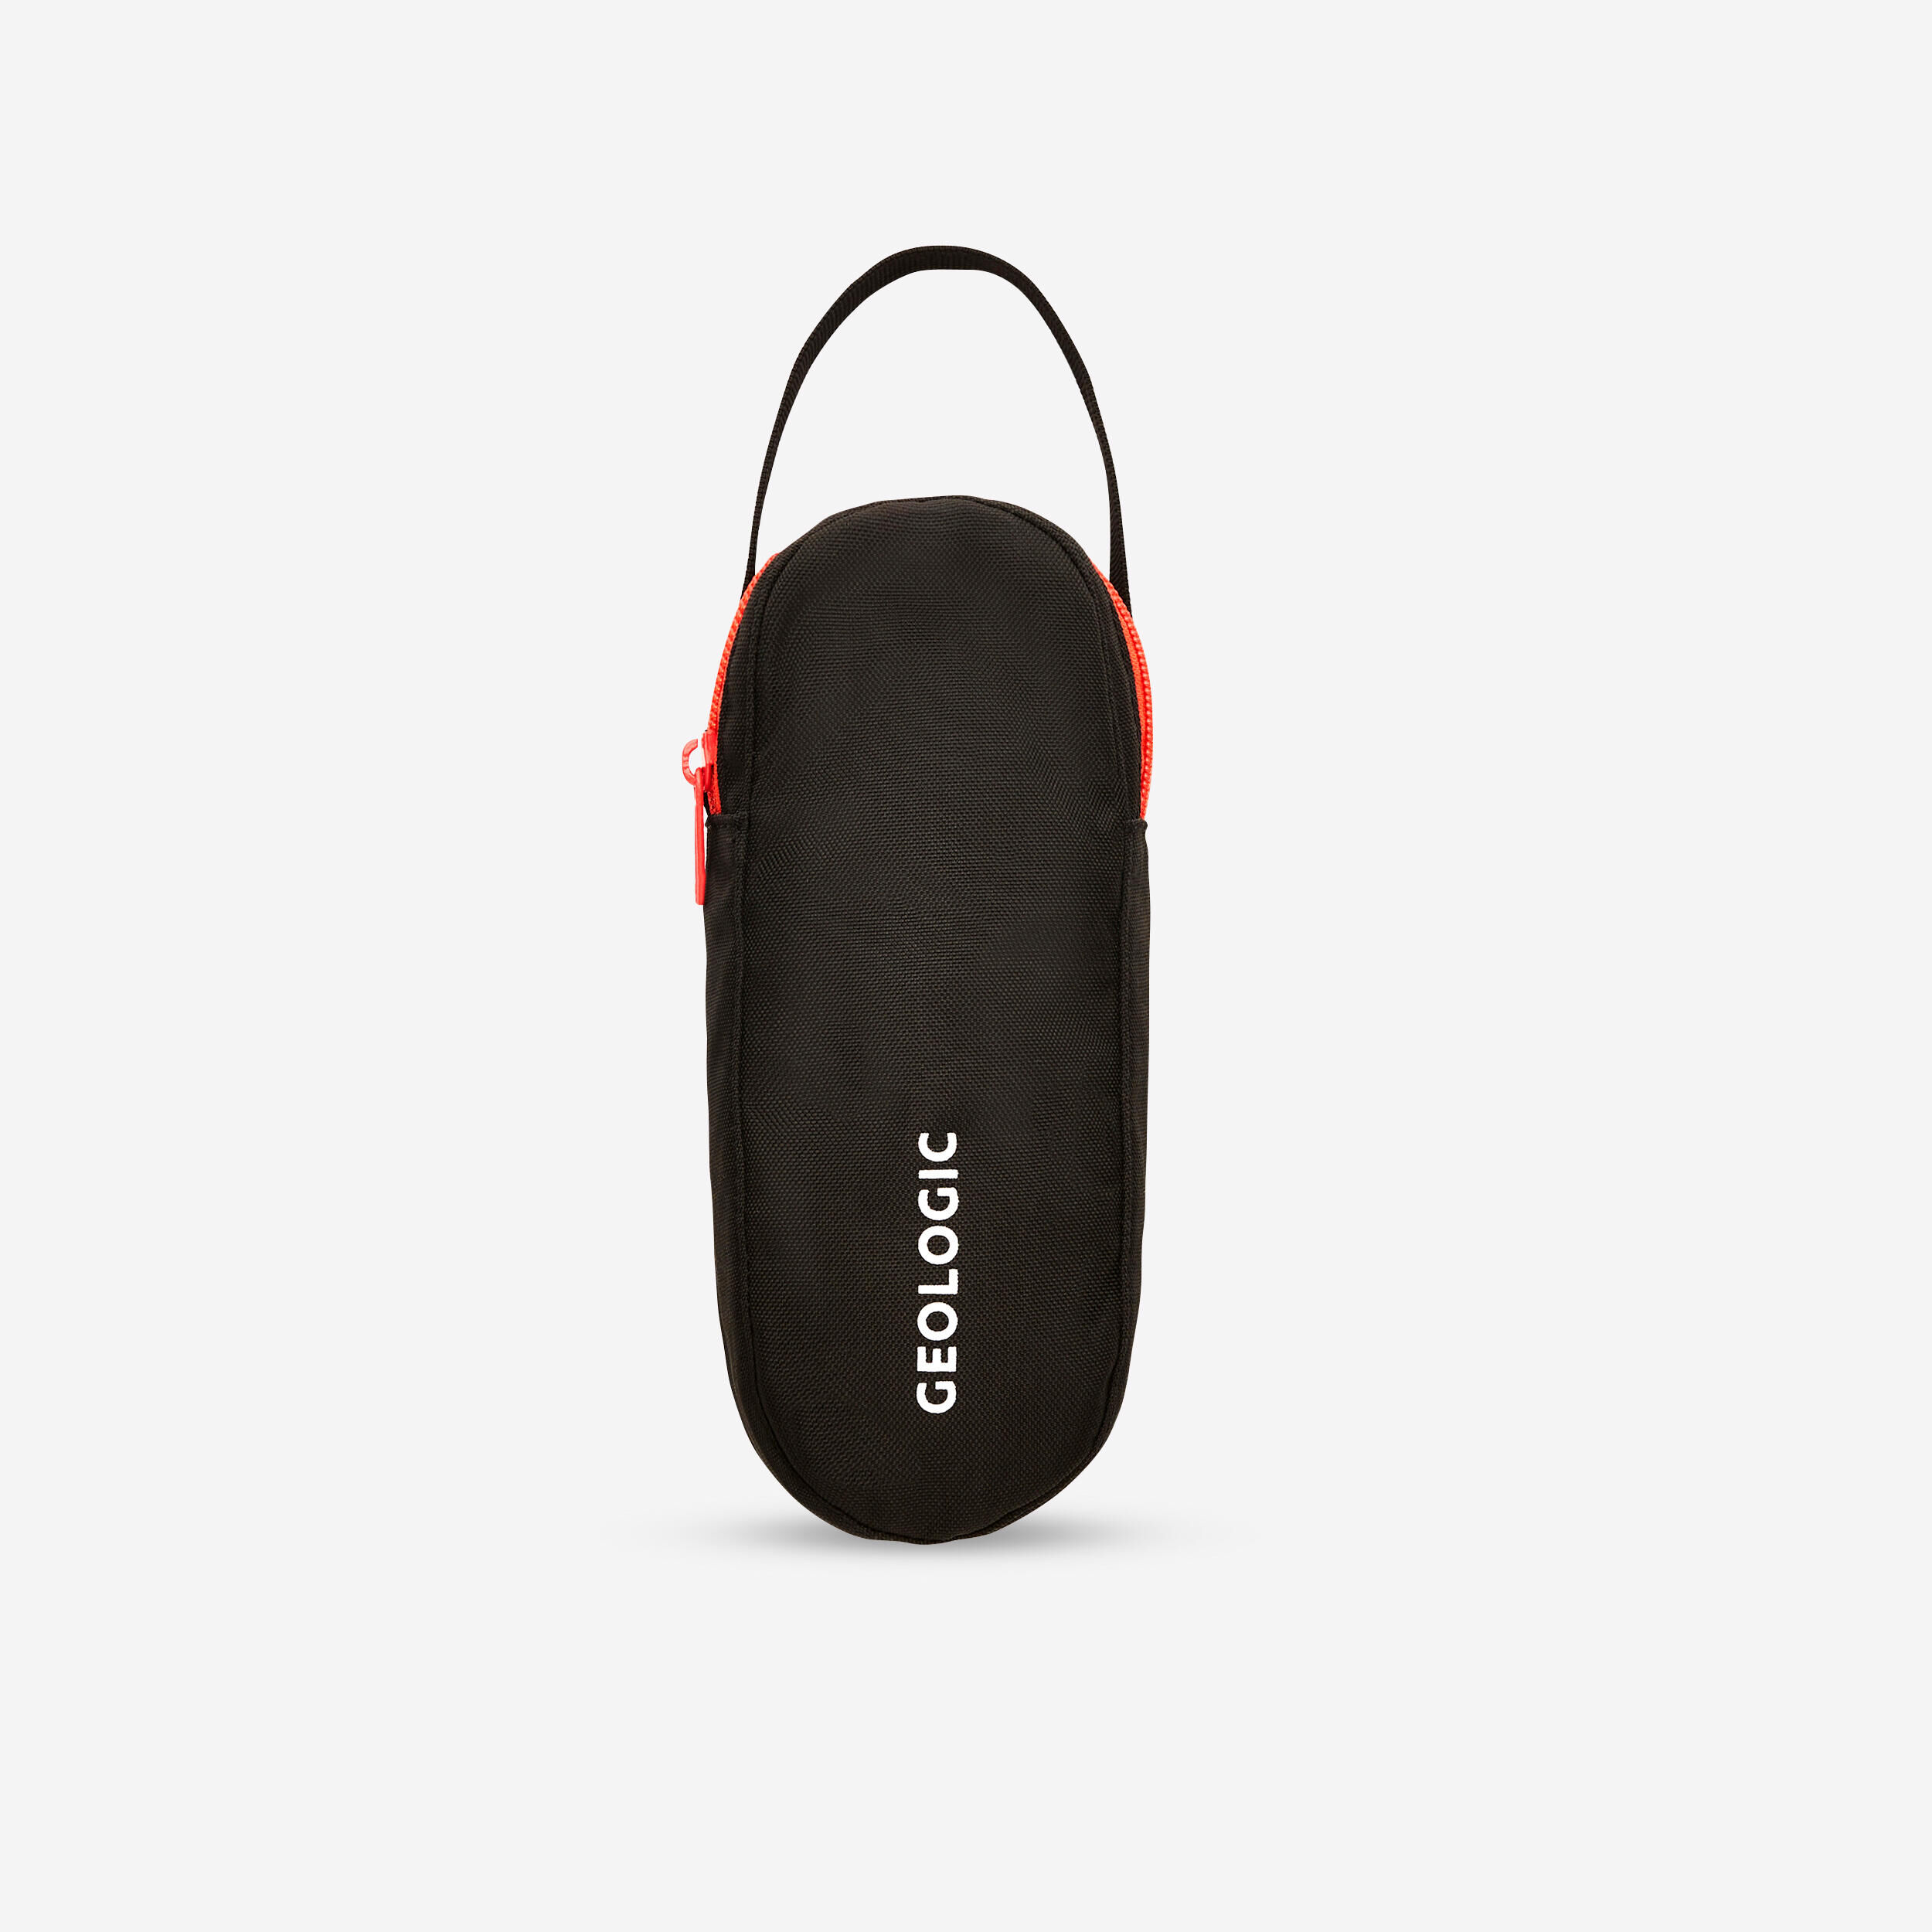 KOODZA Soft Bag for 3 Petanque Boules - Black/Red